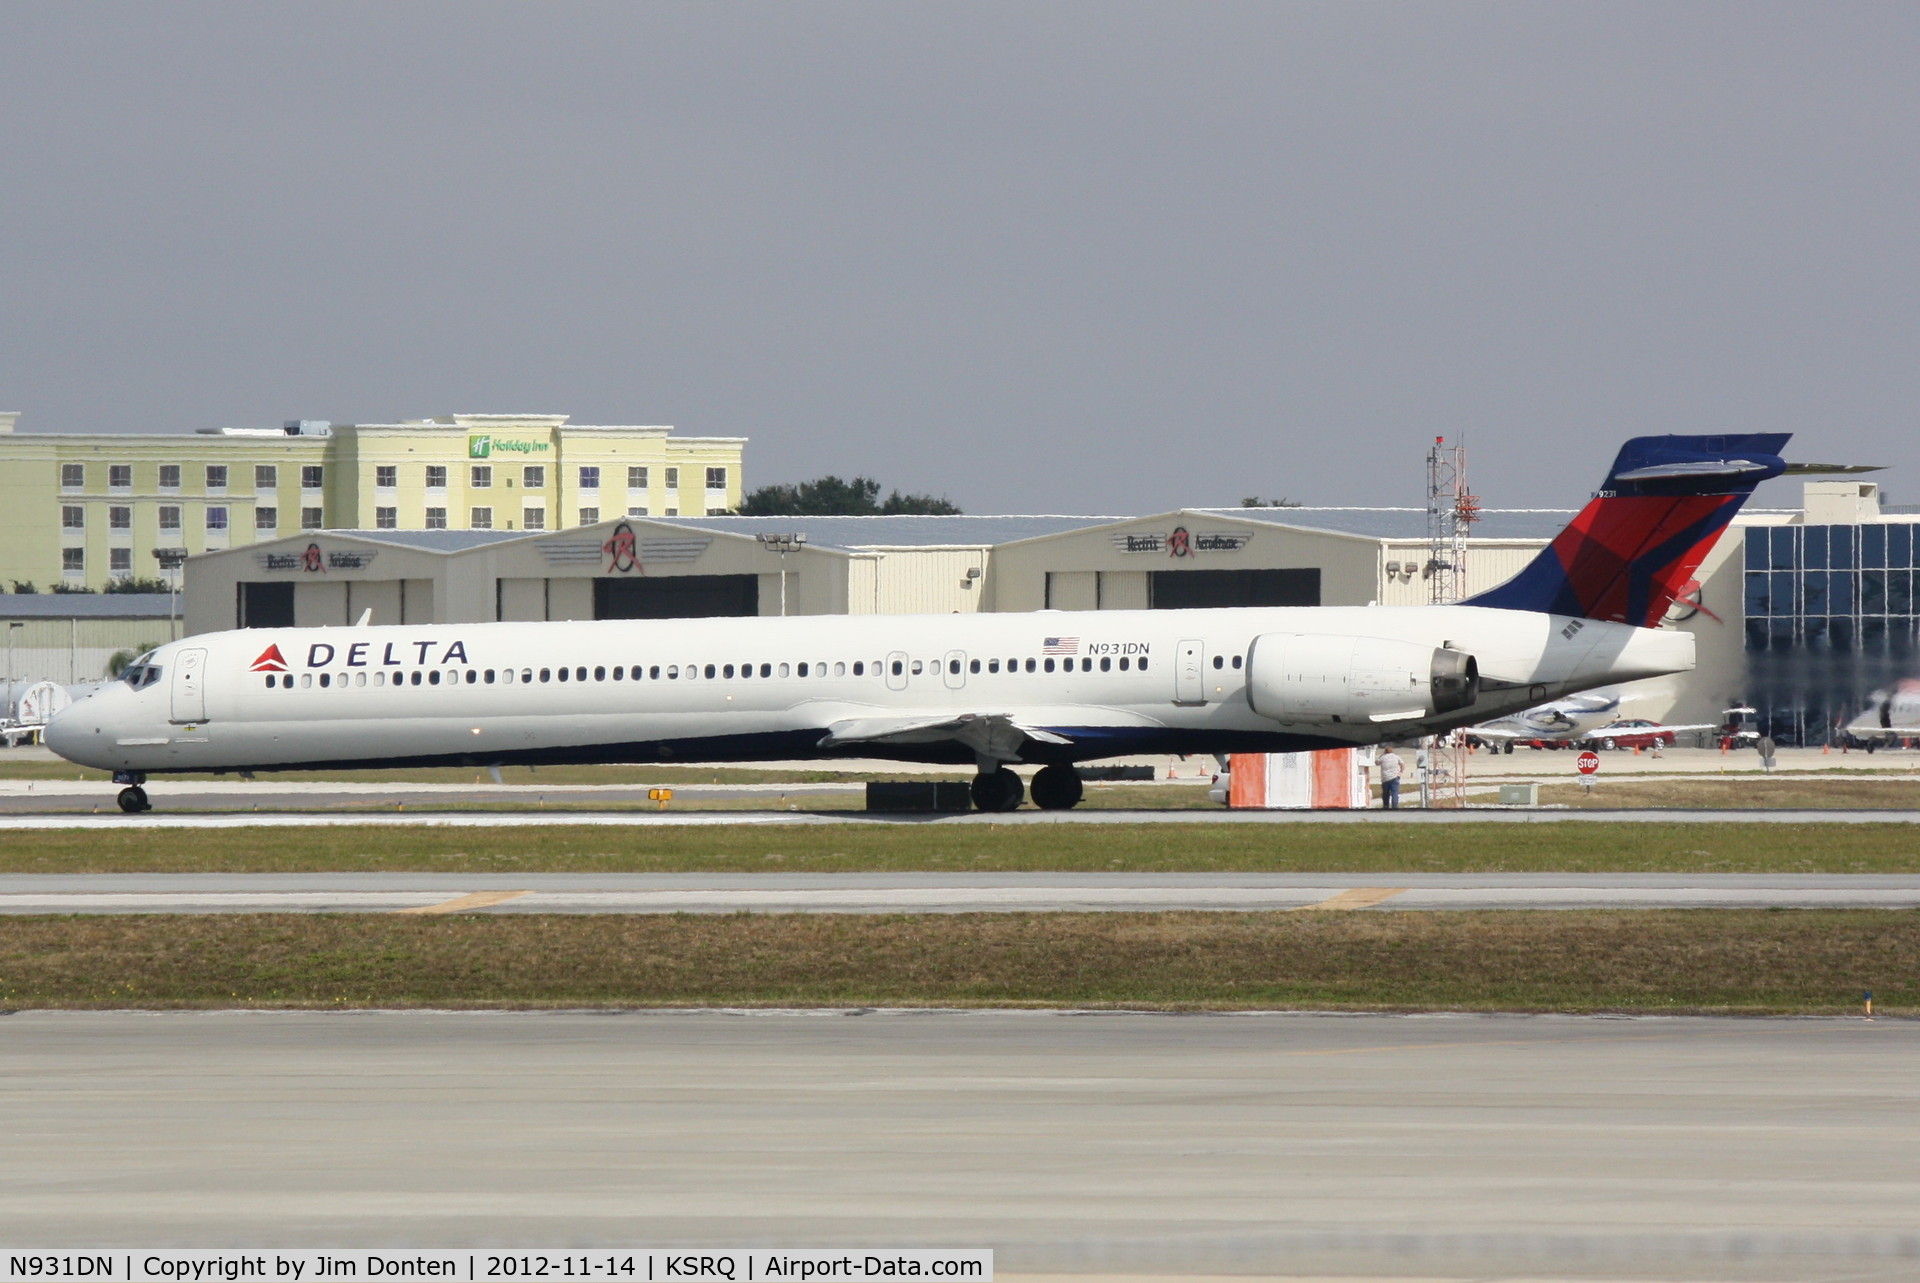 N931DN, 1997 McDonnell Douglas MD-90-30 C/N 53544, Delta 2298 (N931DN) departs Sarasota-Bradenton International Airport enroute to Hartsfield-Jackson Atlanta International Airport